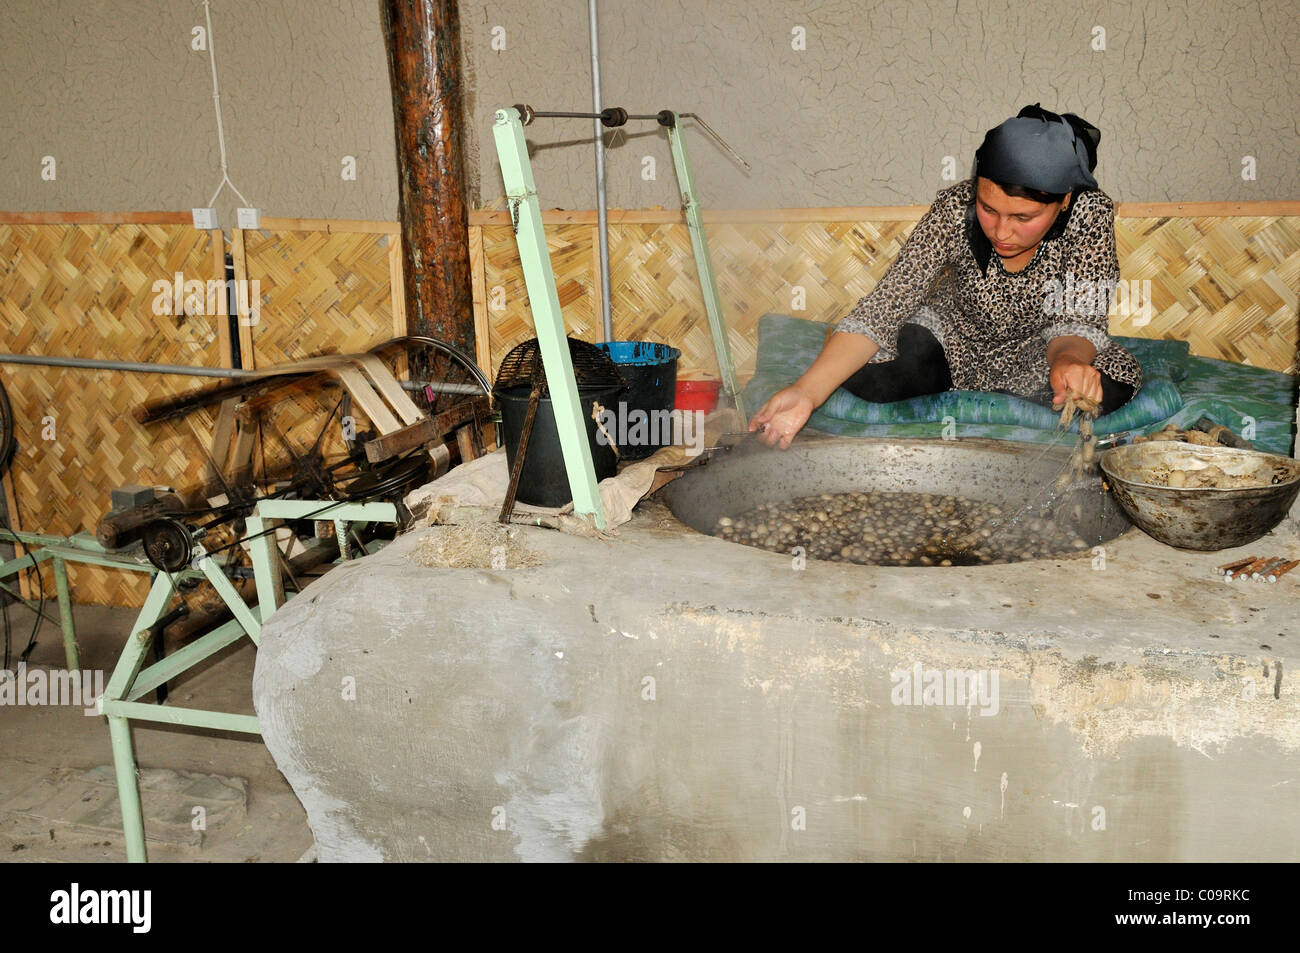 Silk production, Usbek woman cooking silkworm cocoons, Silk Road, Fergana Valley, Uzbekistan, Central Asia Stock Photo